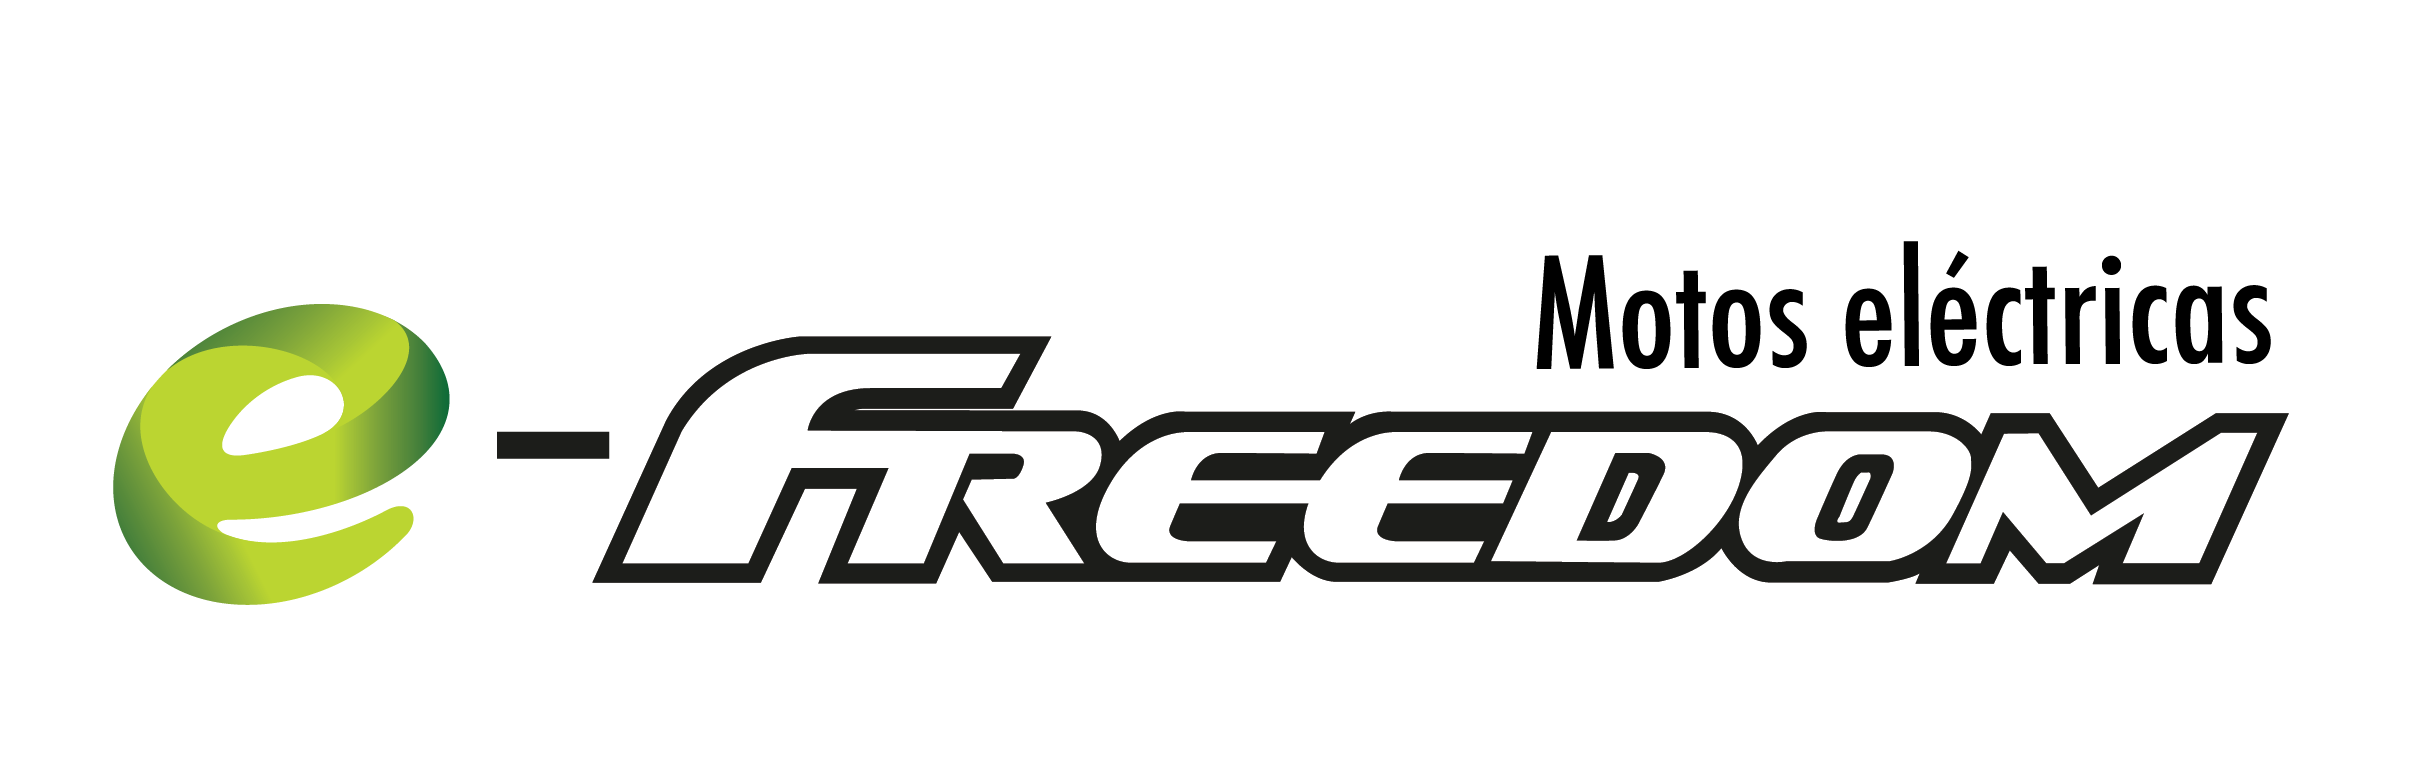 Logo e-Freedom (6226313).png